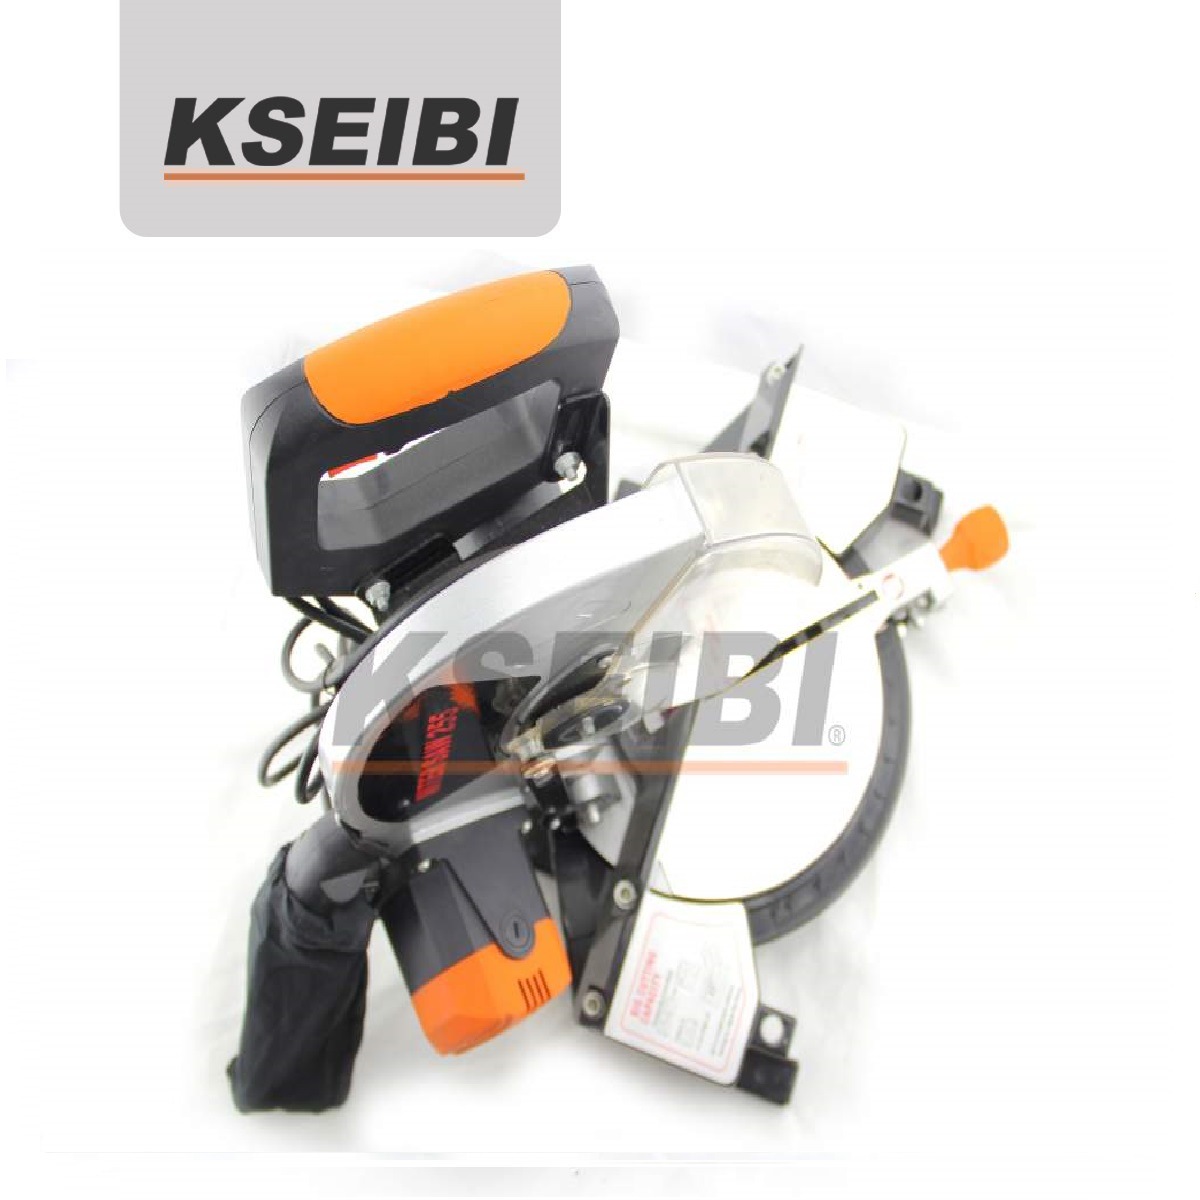 New Kseibi Mitre Saw/Miter Saw/Electric Miter Saw